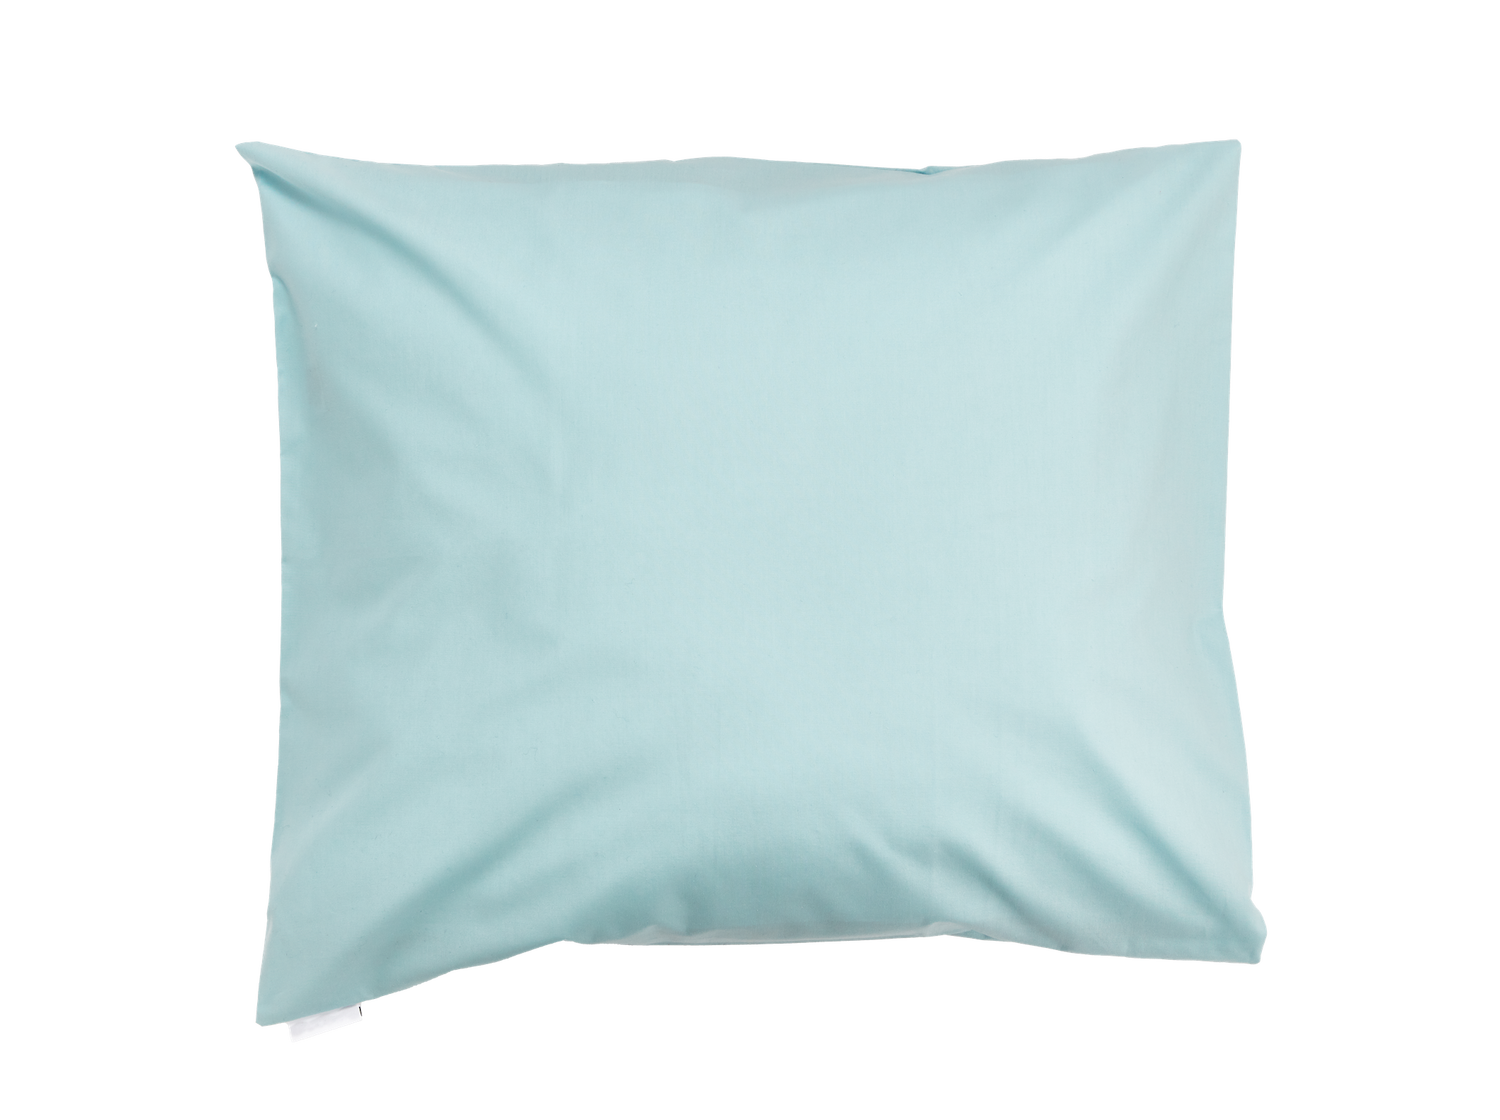  Mini Pillowcase Duck Egg Blue